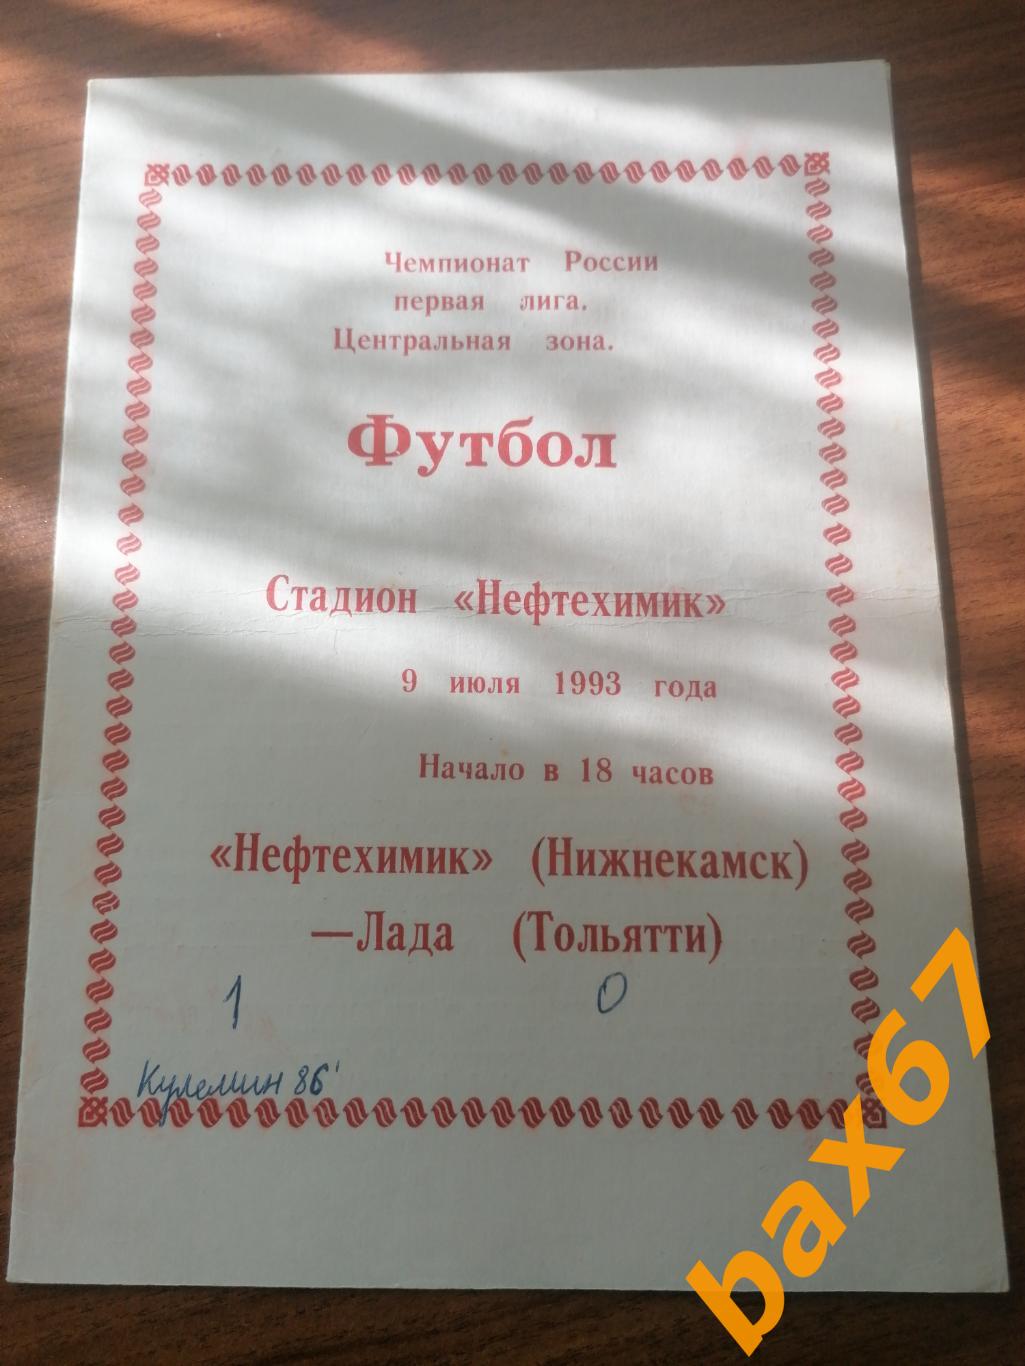 Нефтехимик Нижнекамск - Лада Тольятти 09.07.1993